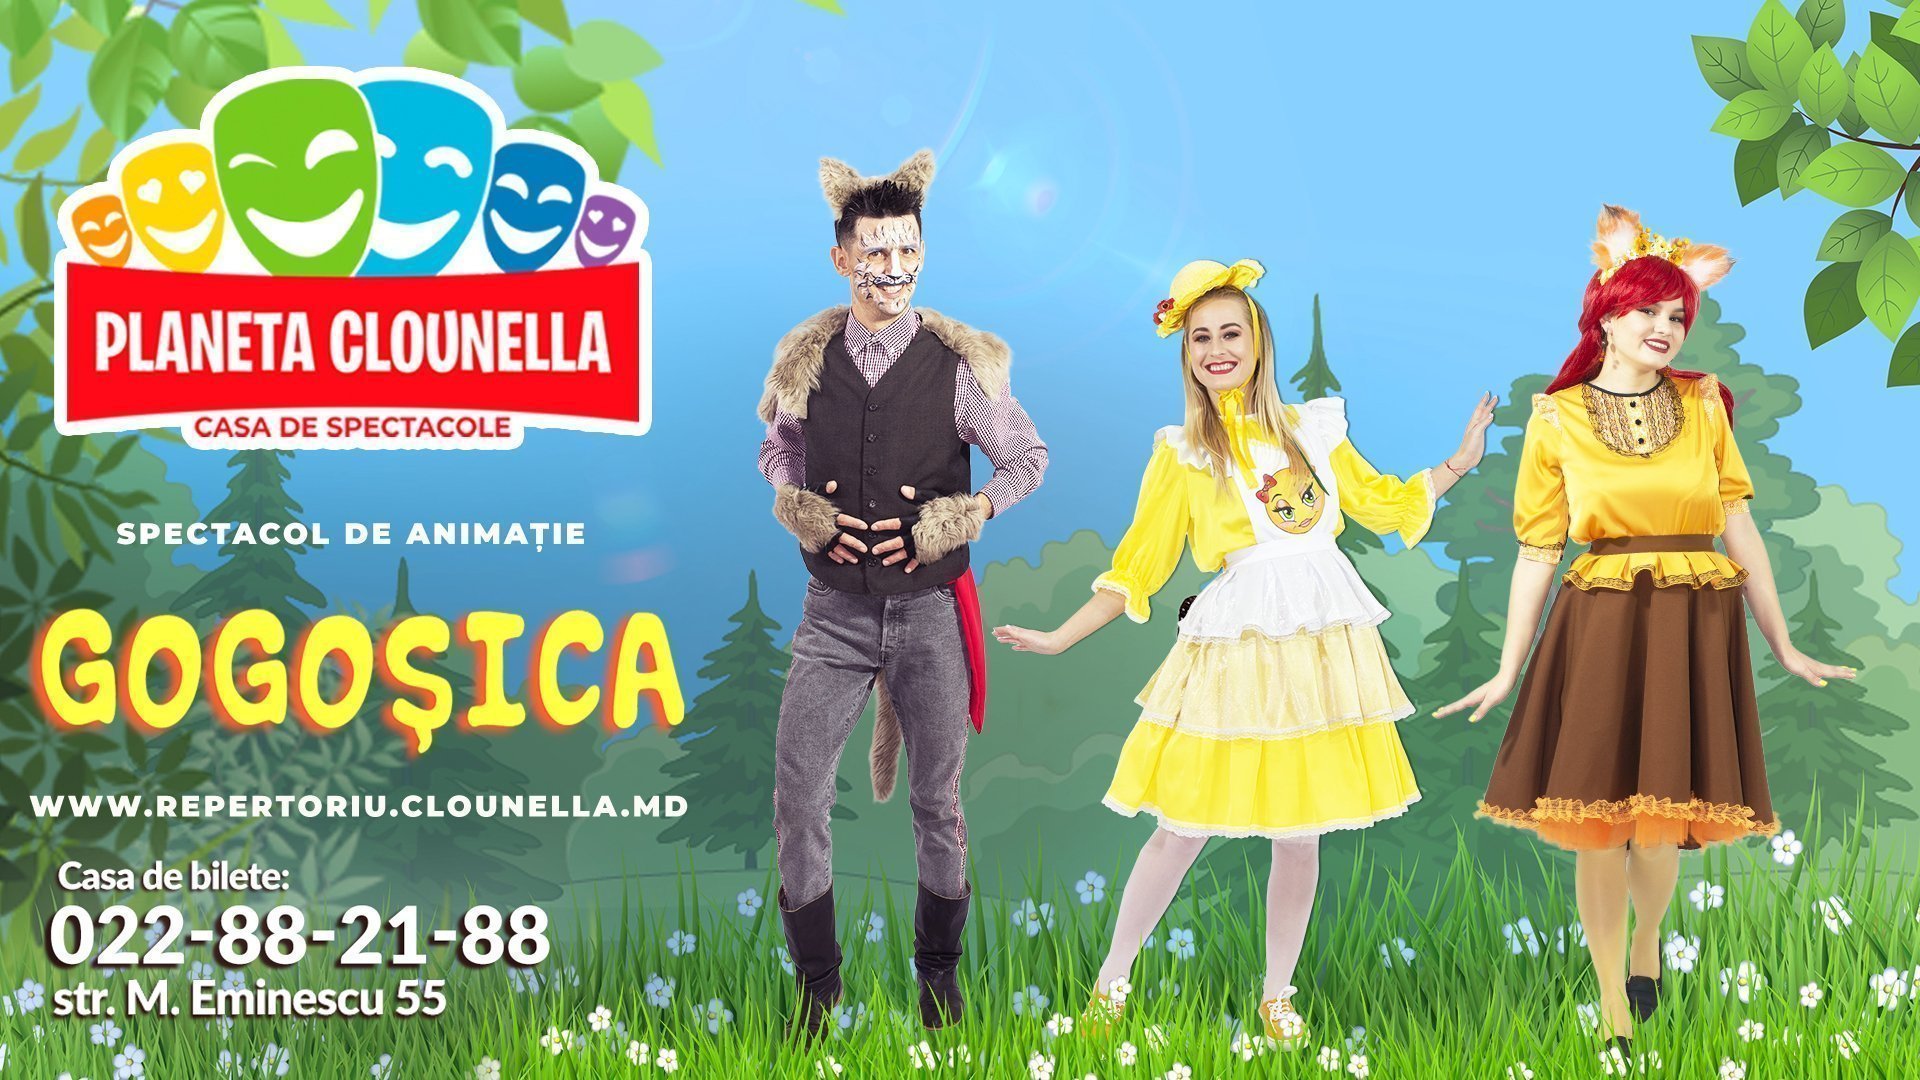 Gogosica - Spectacol Interactiv de Animatie pentru Copii | Martie 2020 | +3